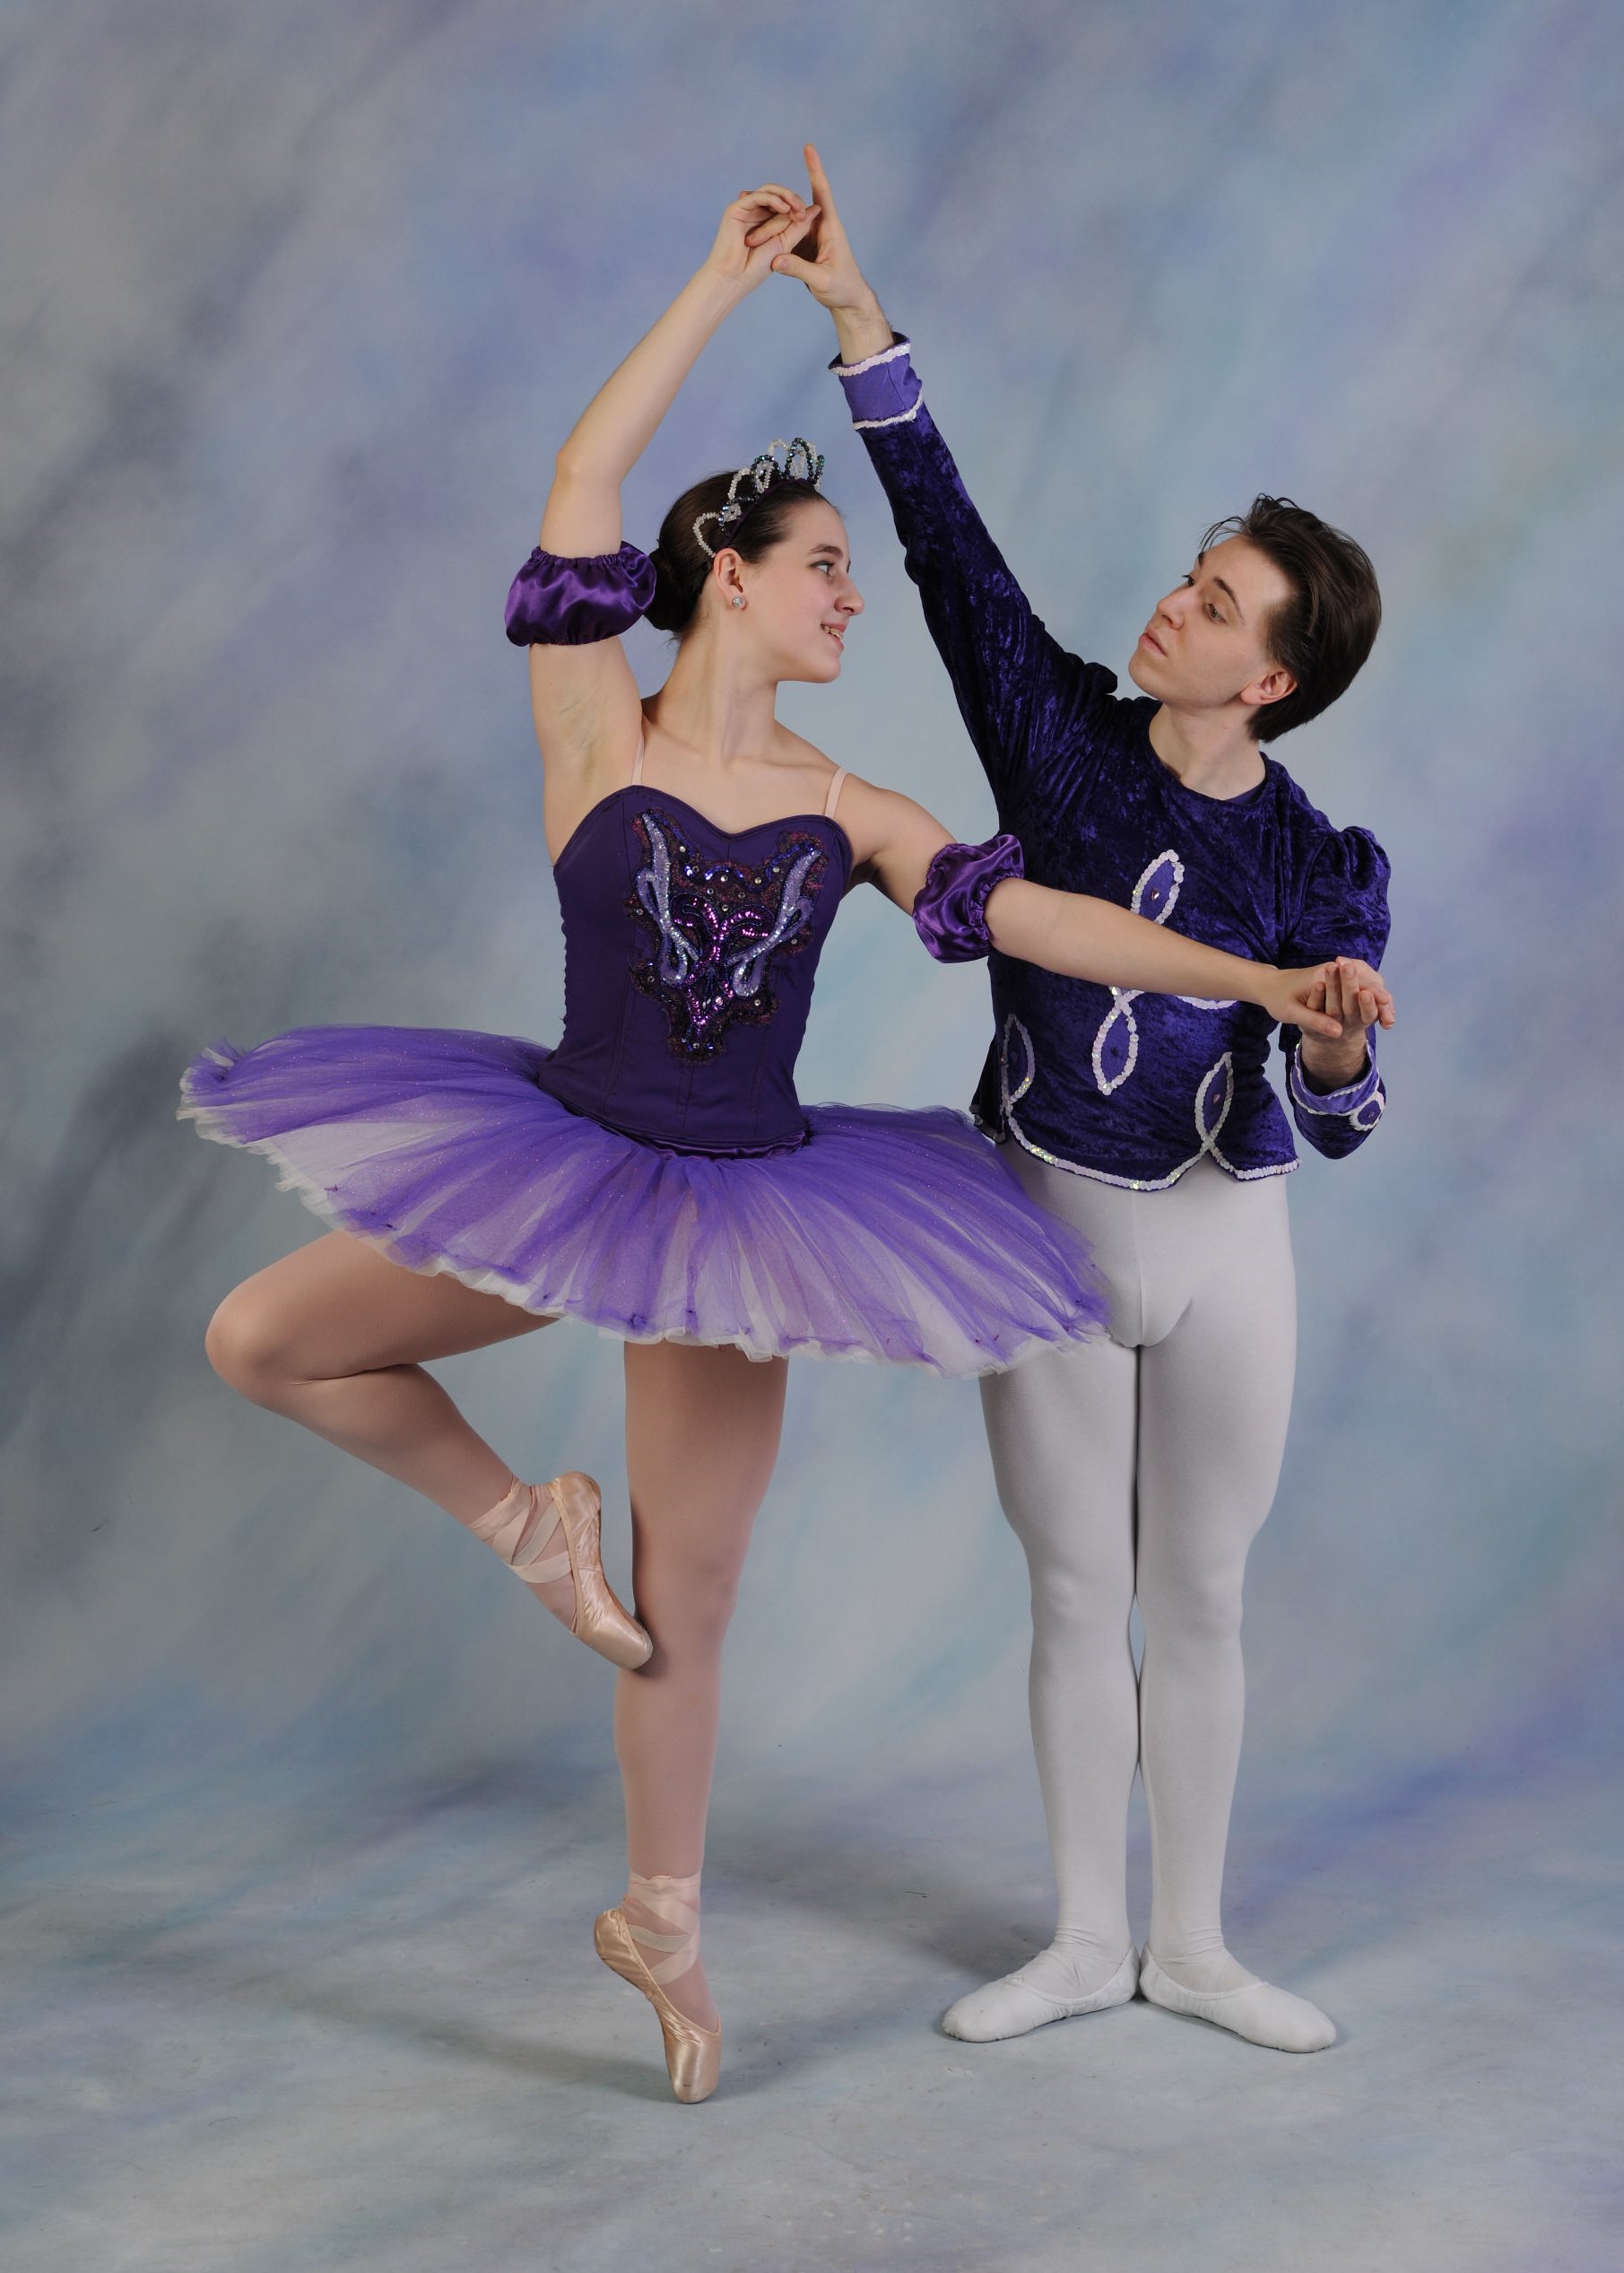 Support Ashland Regional Ballet online!